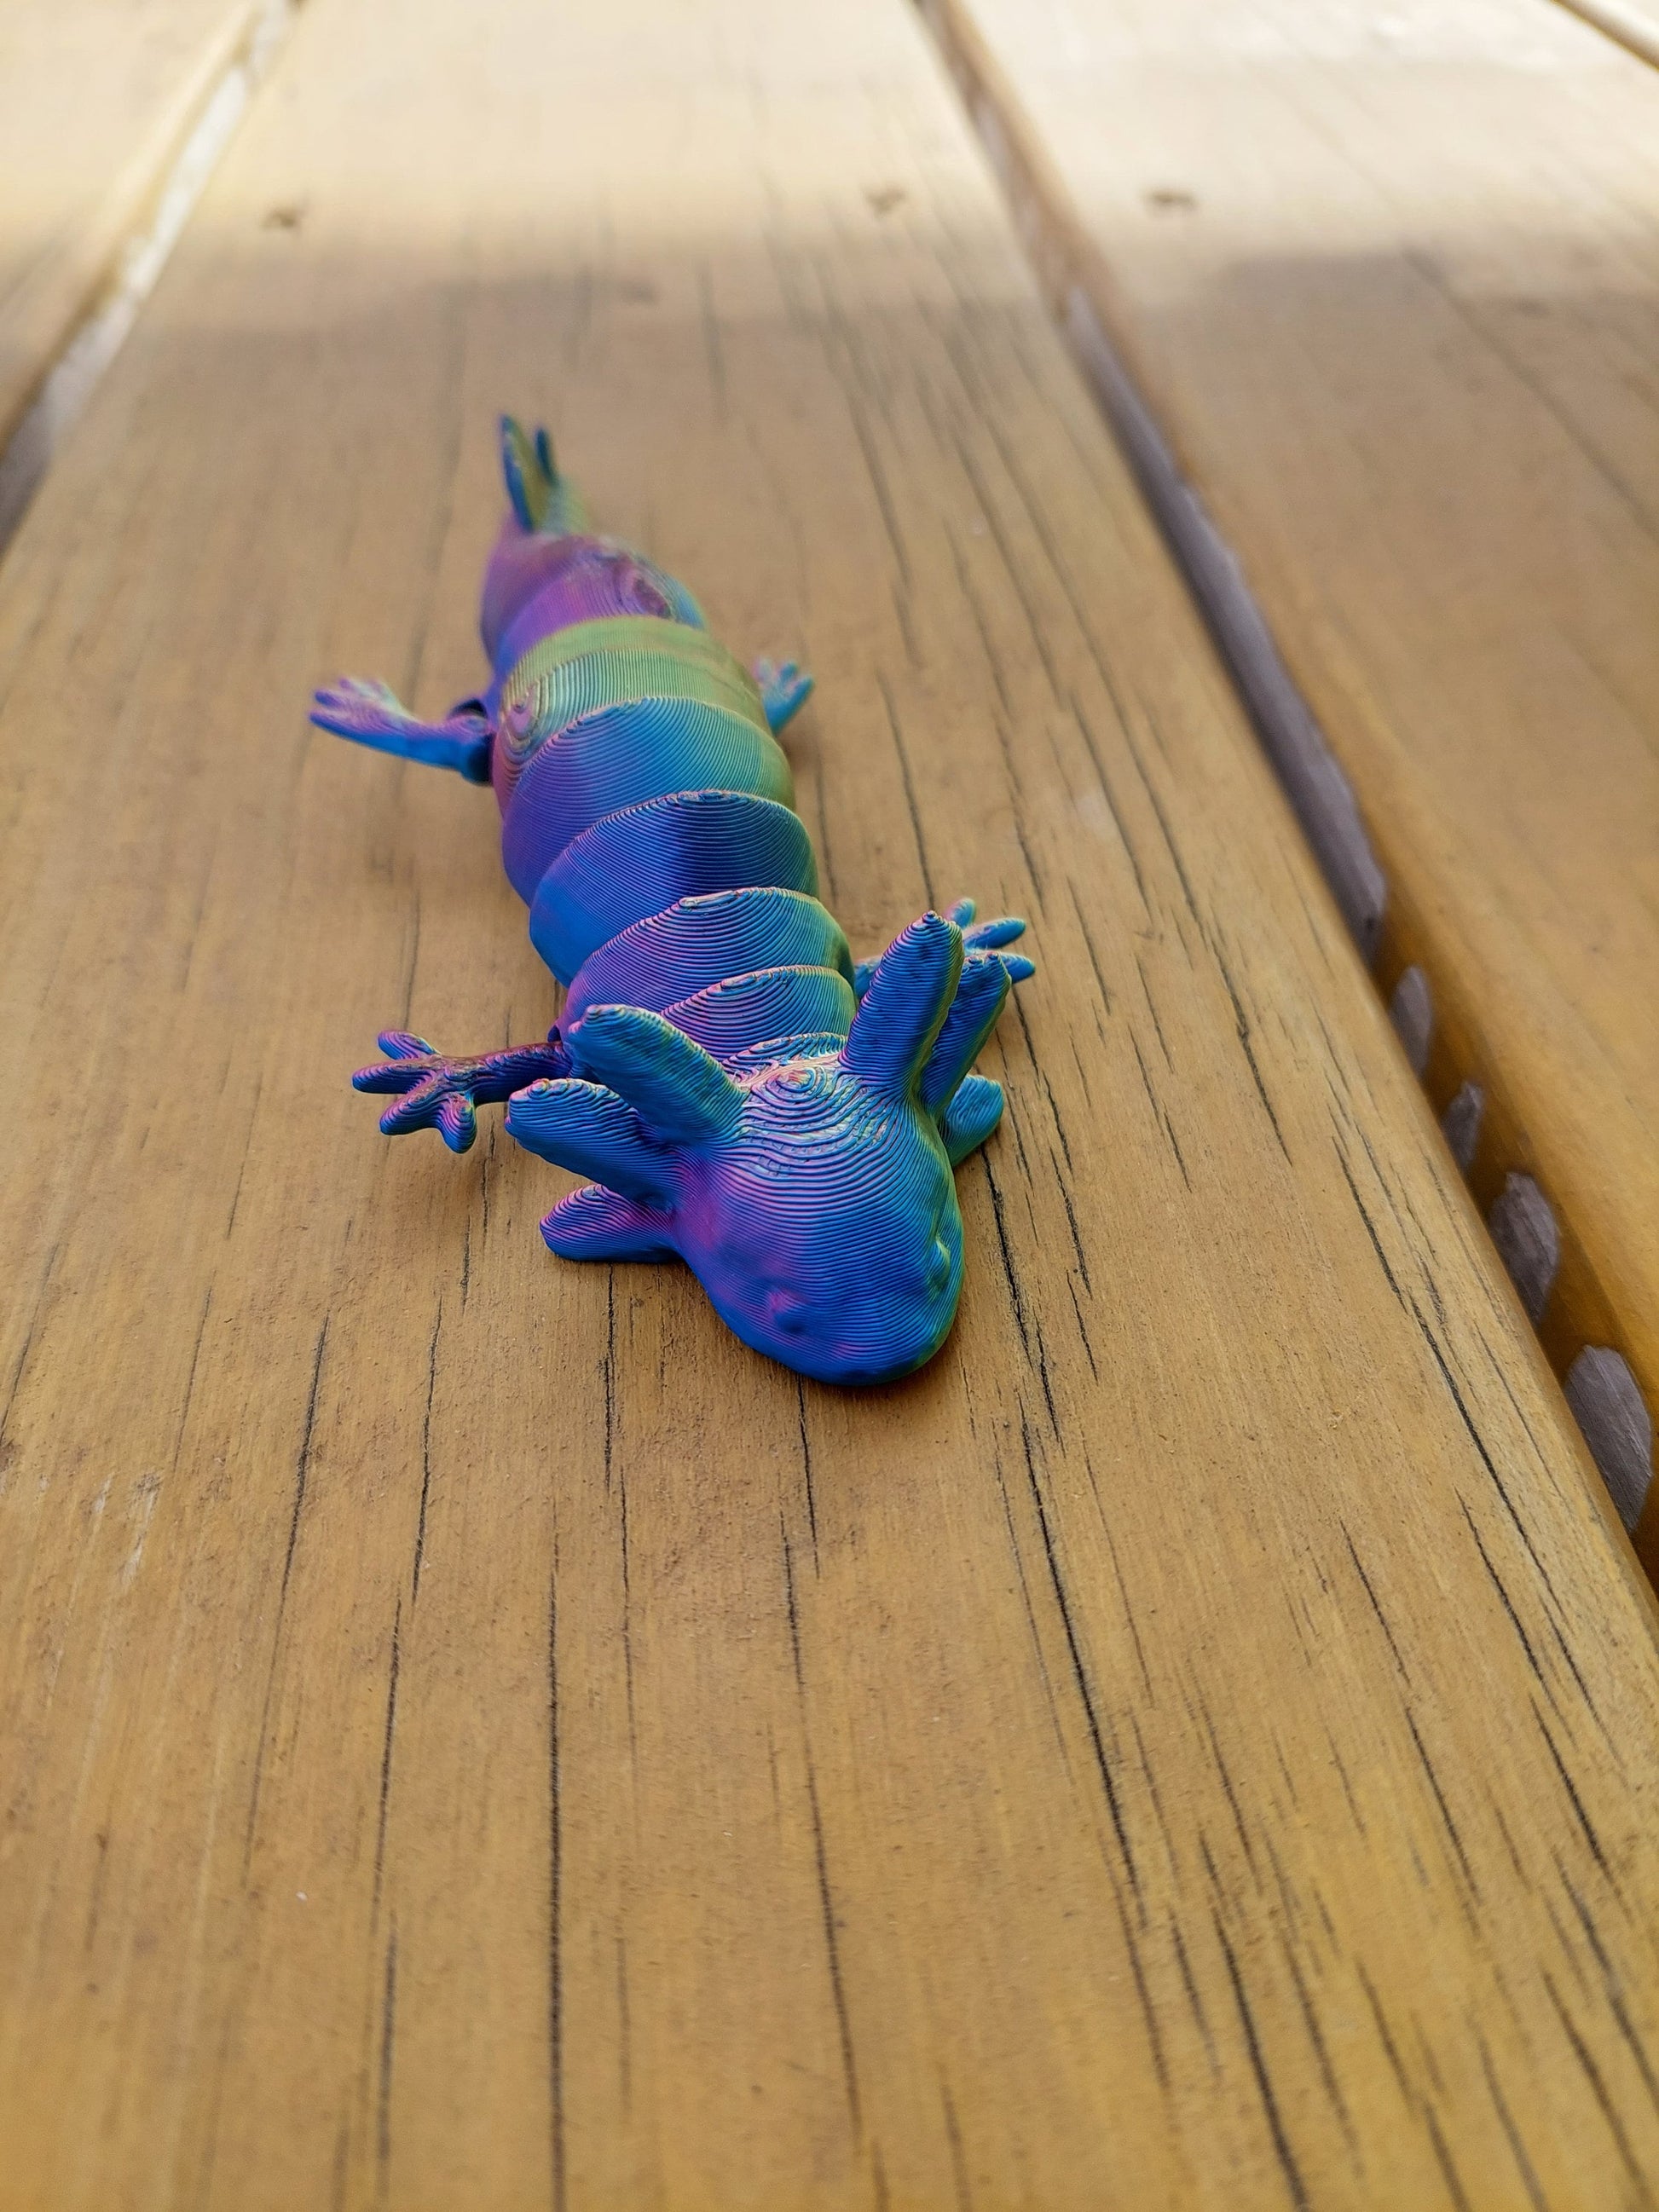 3D-Printed Articulated Axolotl